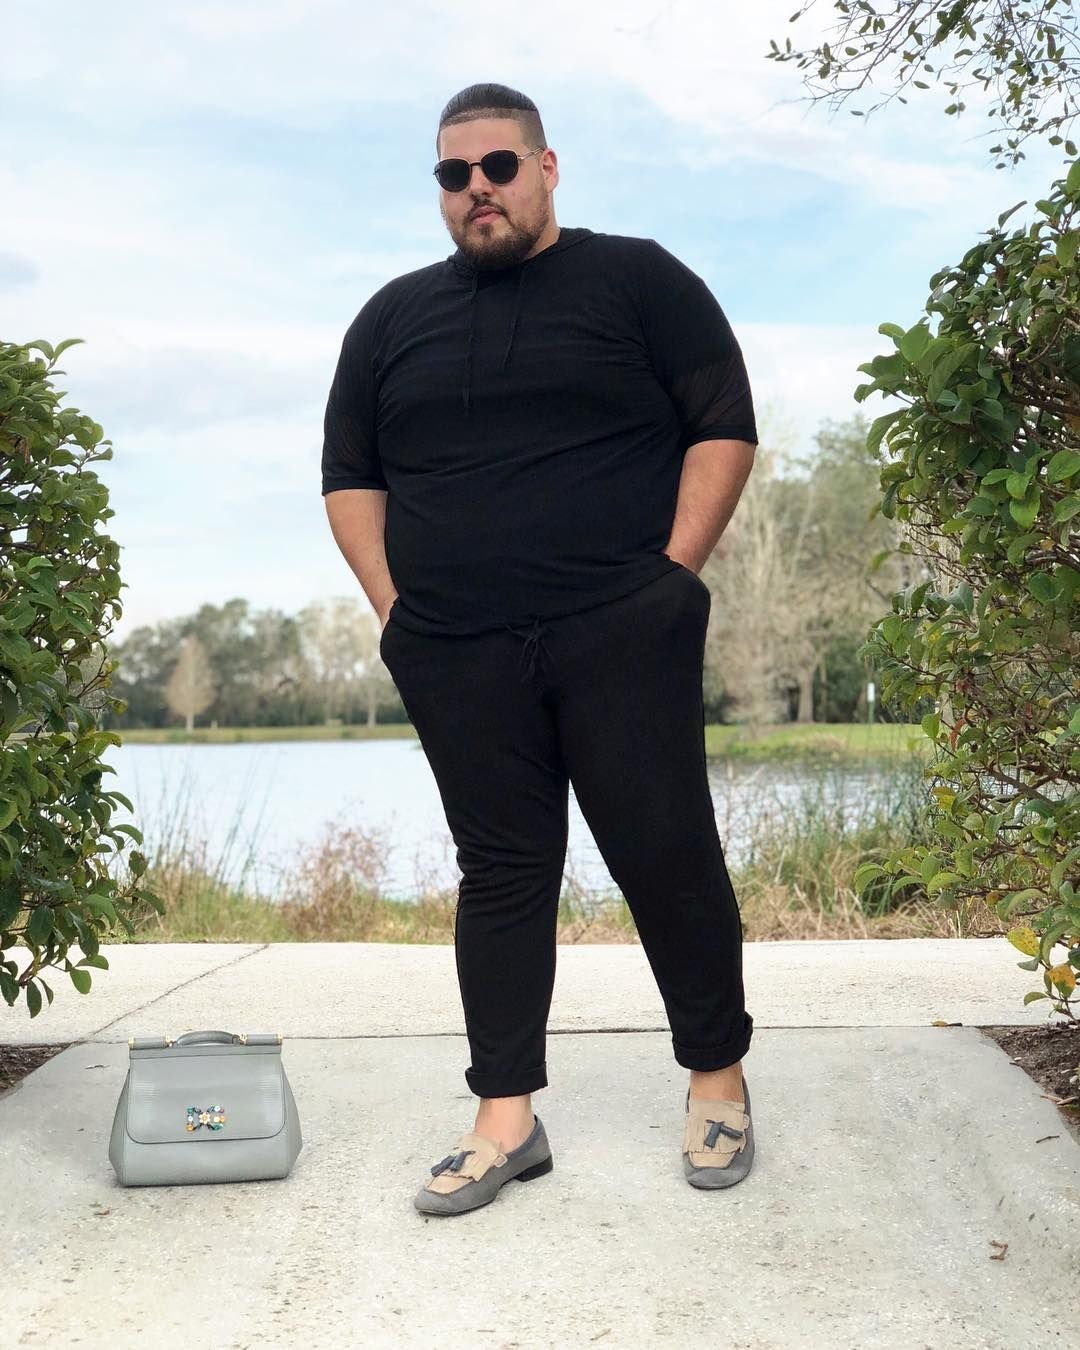 Мужчина толстый москва. Мужской костюм Биг сайз. Одежда для толстых мужчин. Полный мужчина. Стильная одежда для полных мужчин.